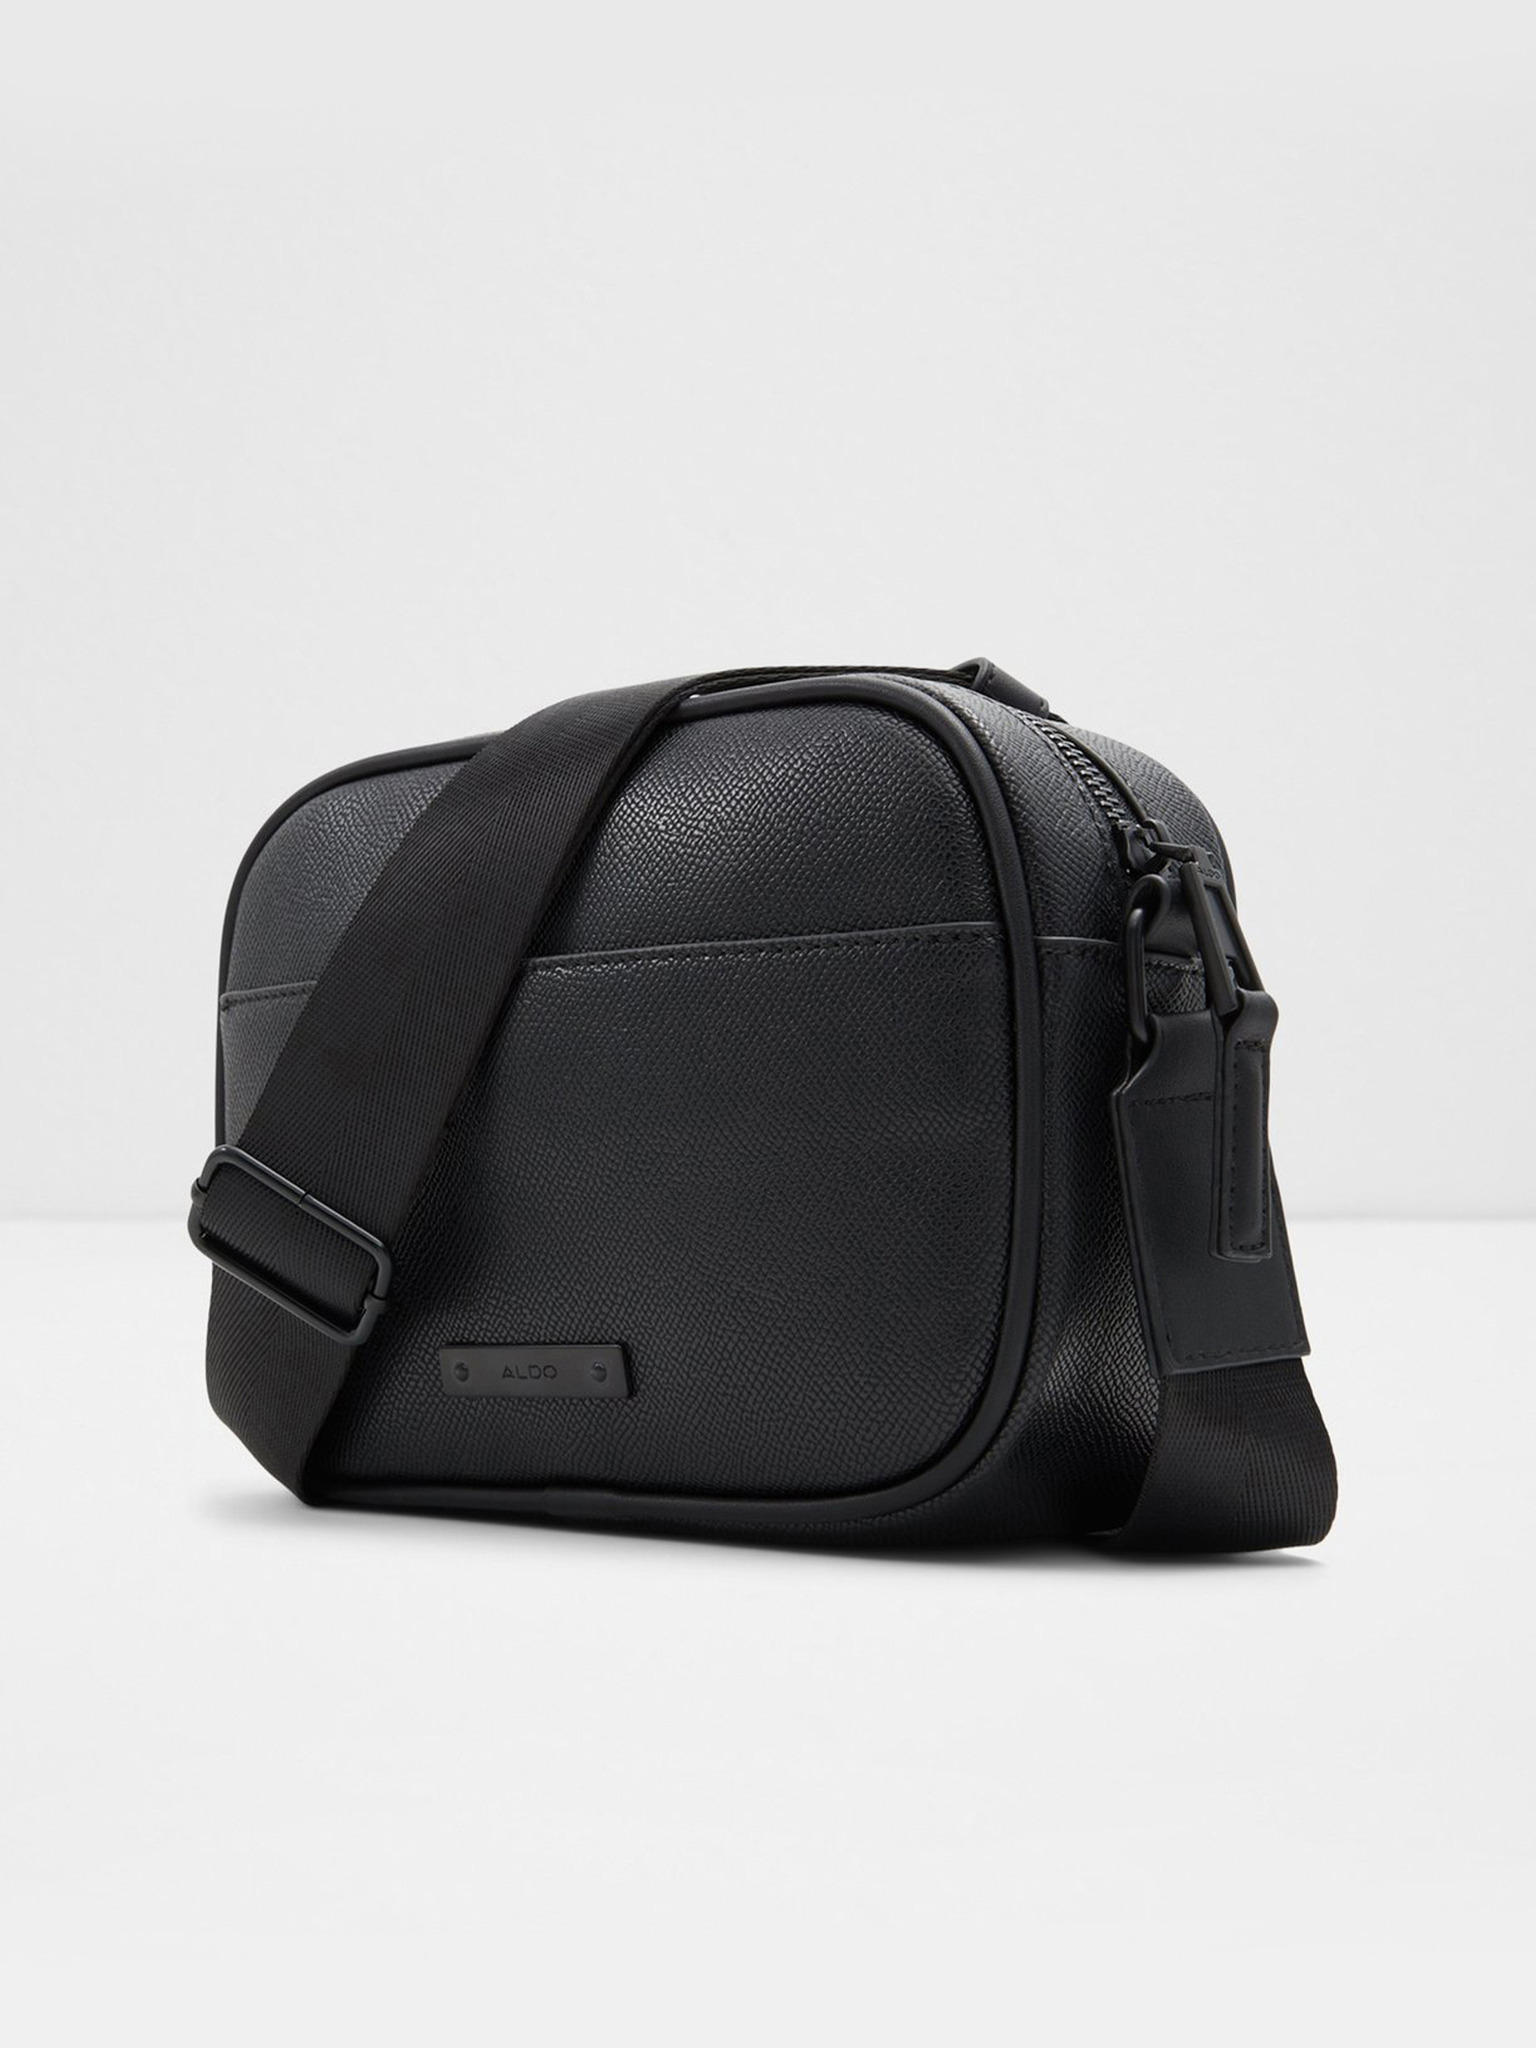 Aldo Mens Sevirenia Messenger Bag Black - Black Leather : Amazon.in: Fashion